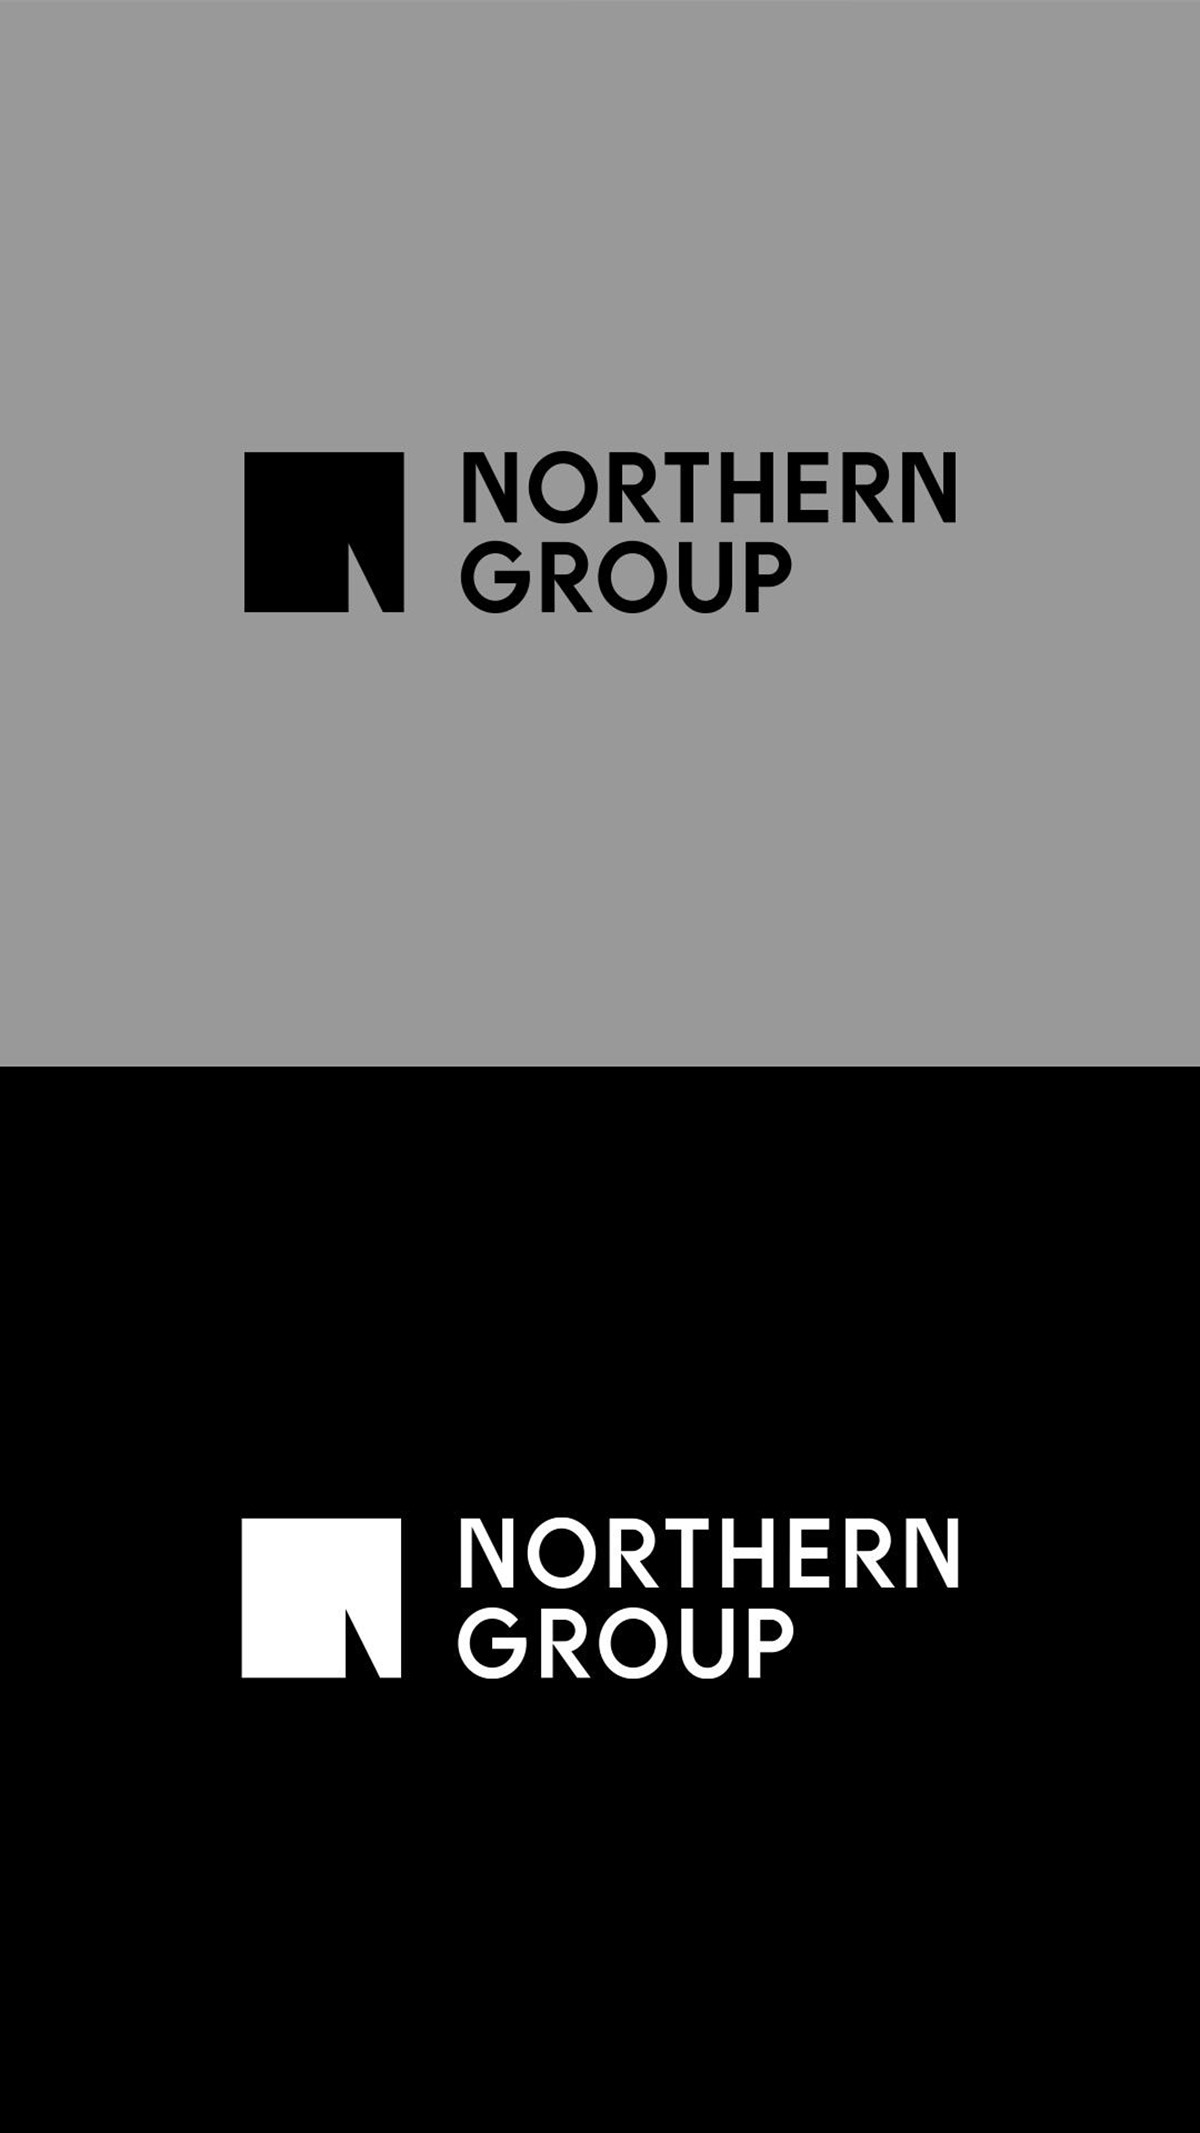 Northern Group. Bespoke typographic logo lock-ups. Brand development design by Superfried.